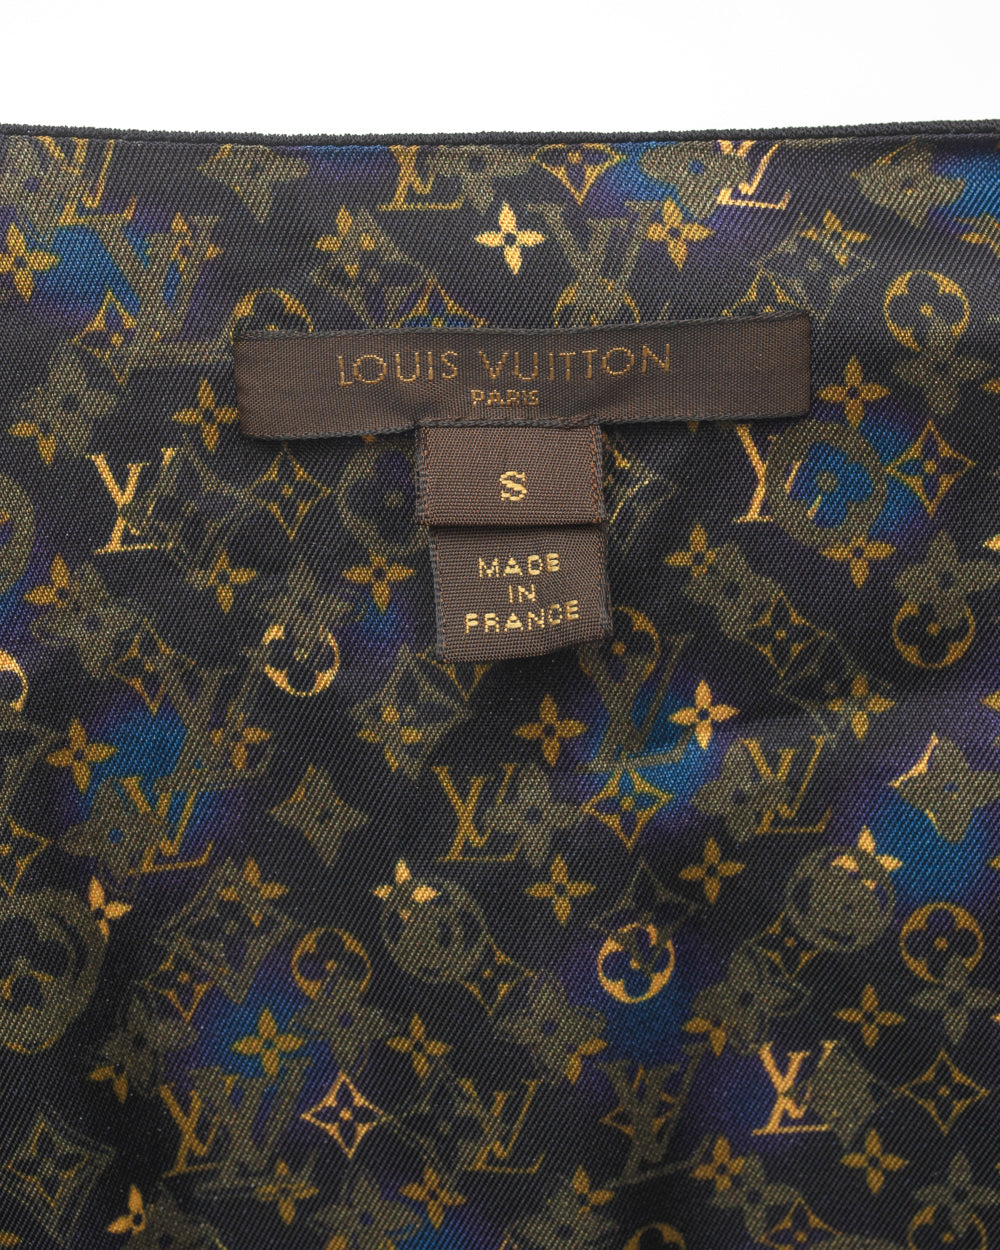 Louis Vuitton Big Black Logo Center Blue Carpet Runners - Blinkenzo